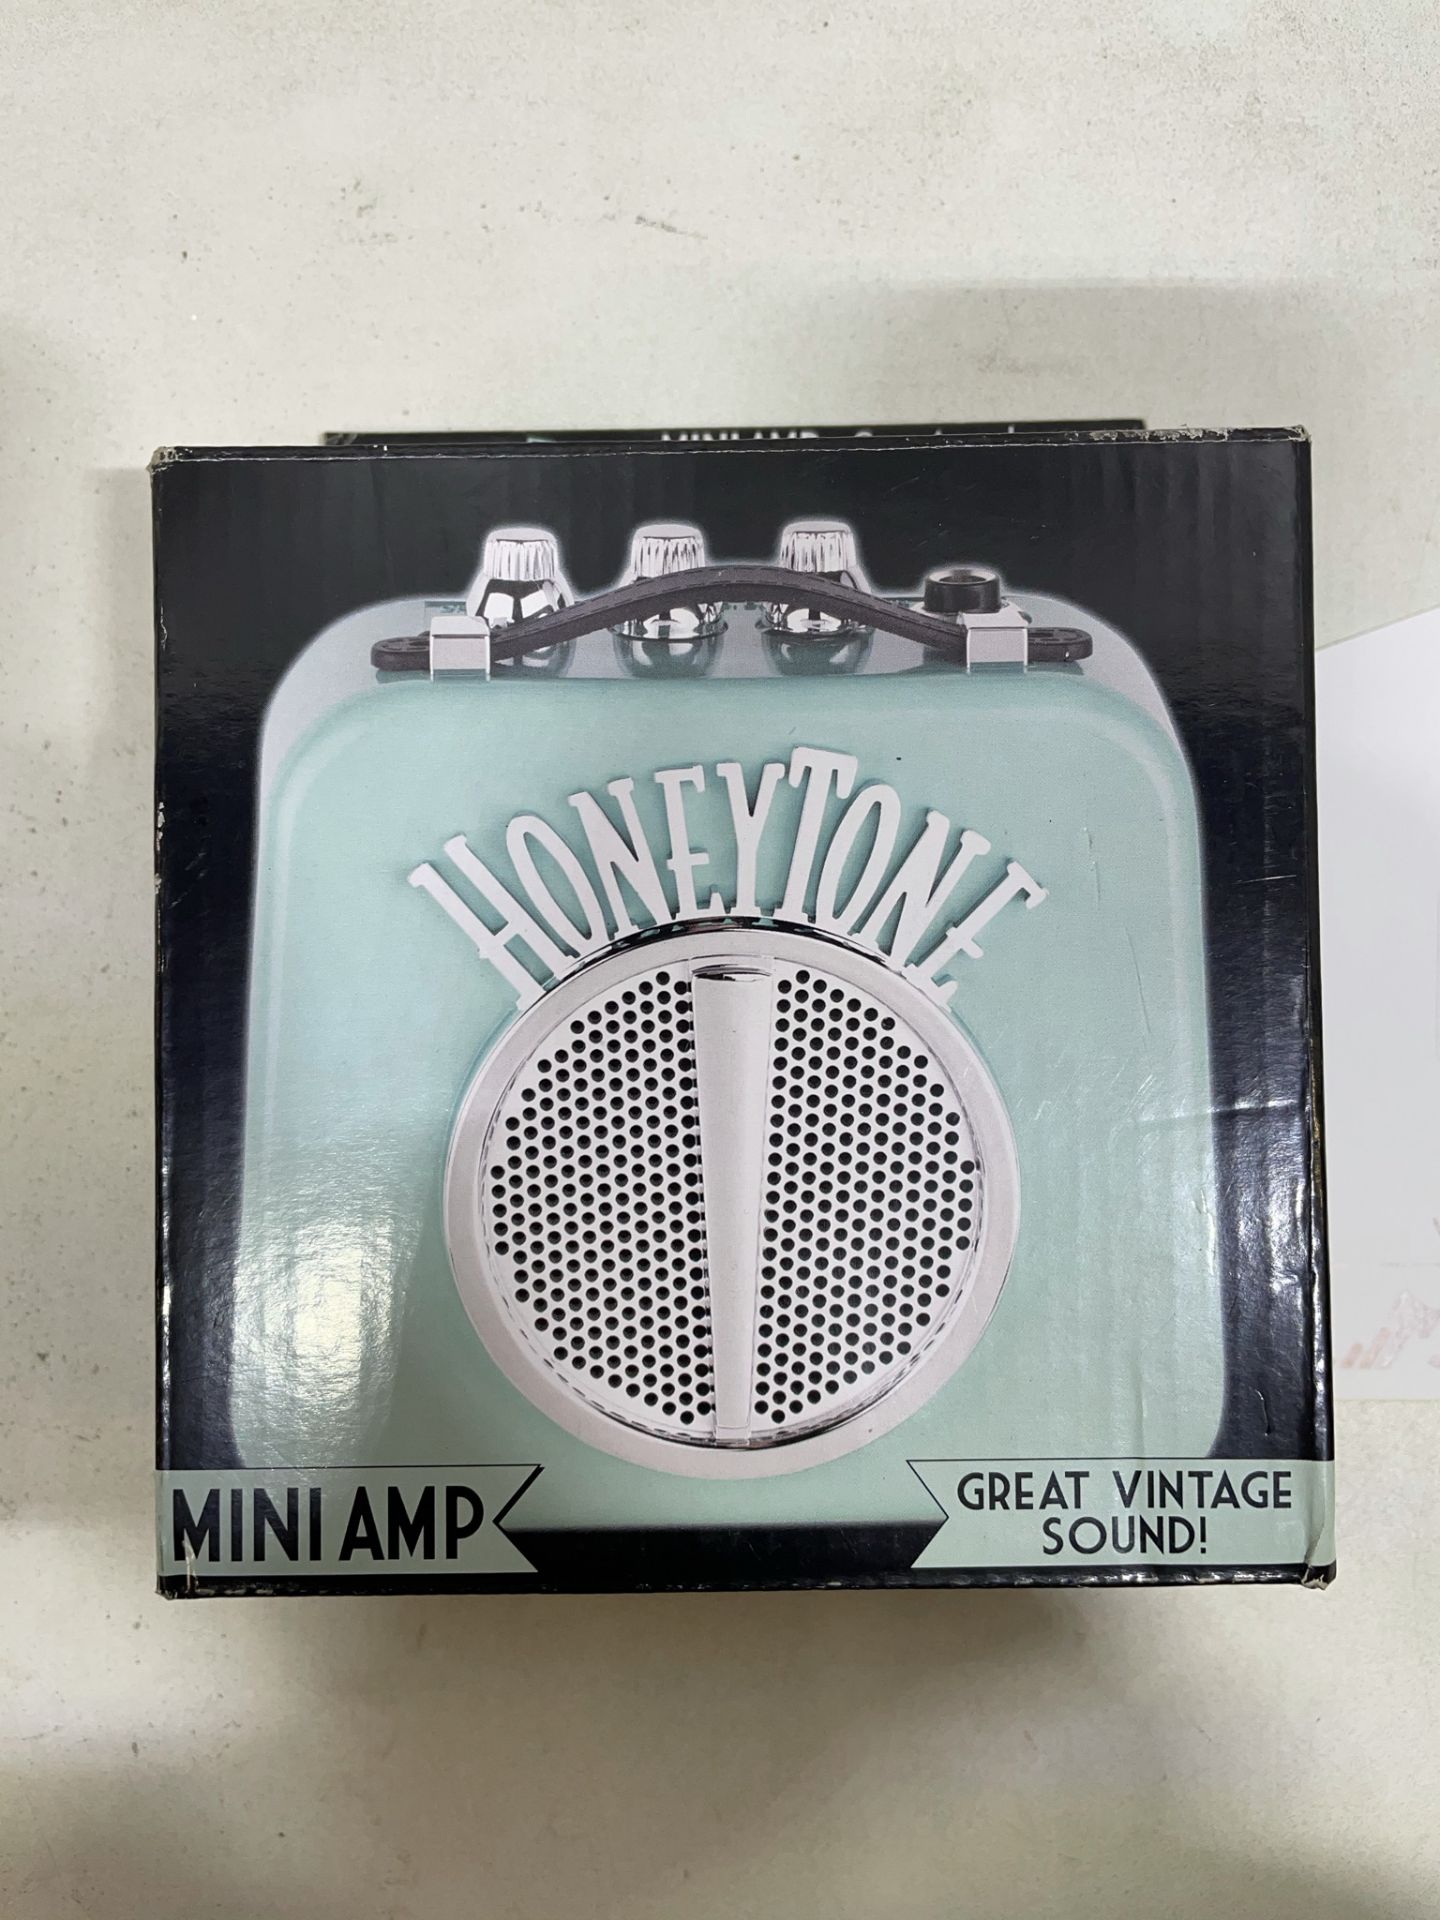 Honeytone Mini Amplifier - Image 2 of 3